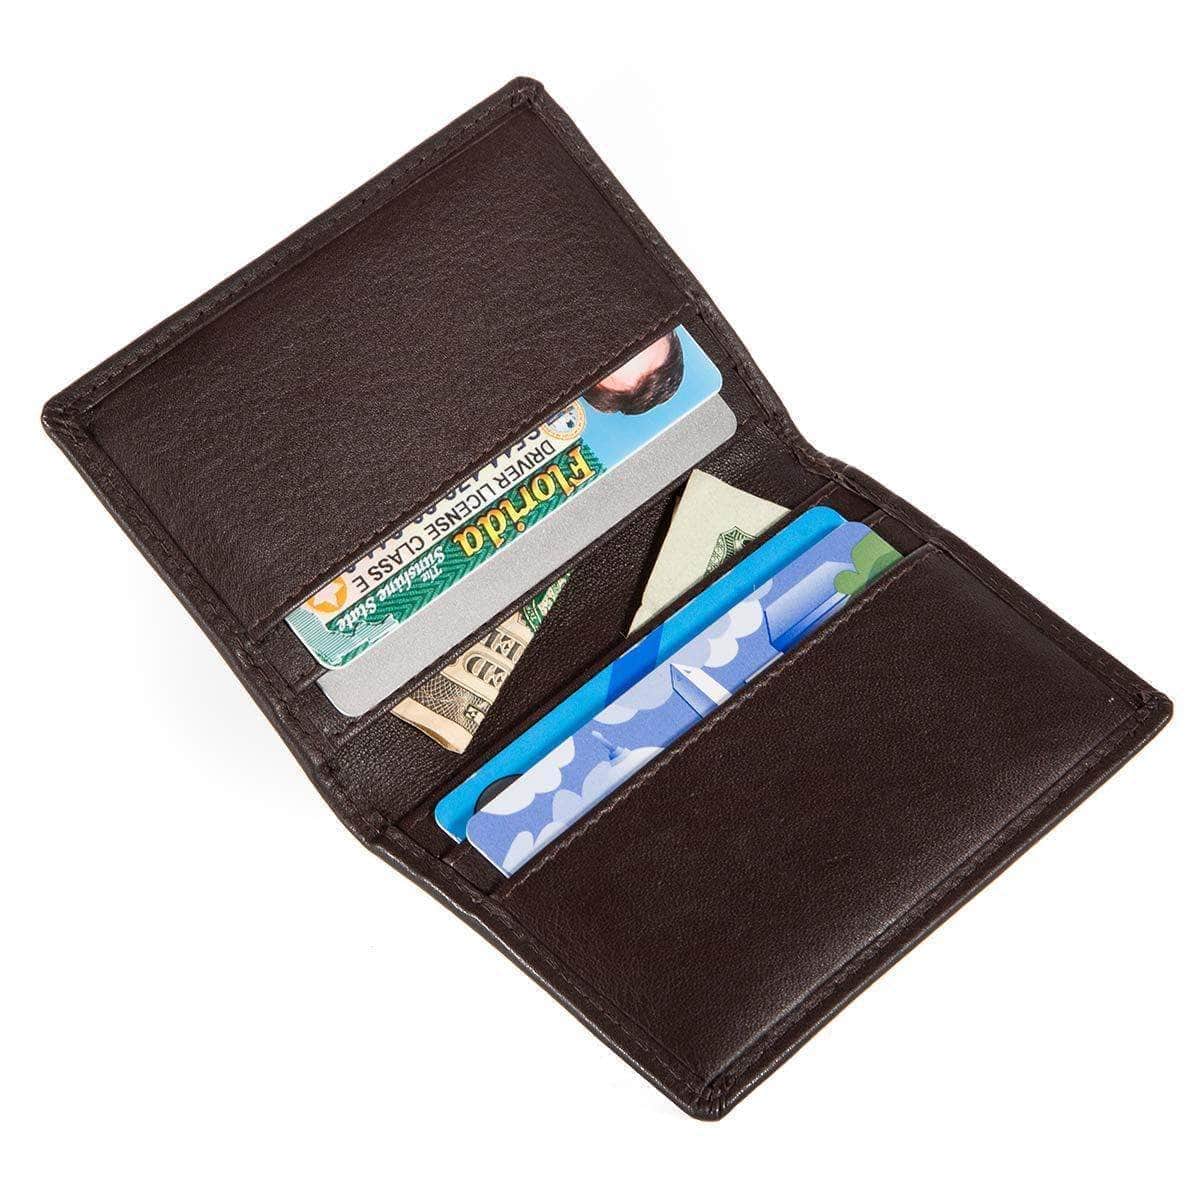 Mens Womens Leather Wallet Credit Card Holder RFID Blocking Zipper Pocket  Purse